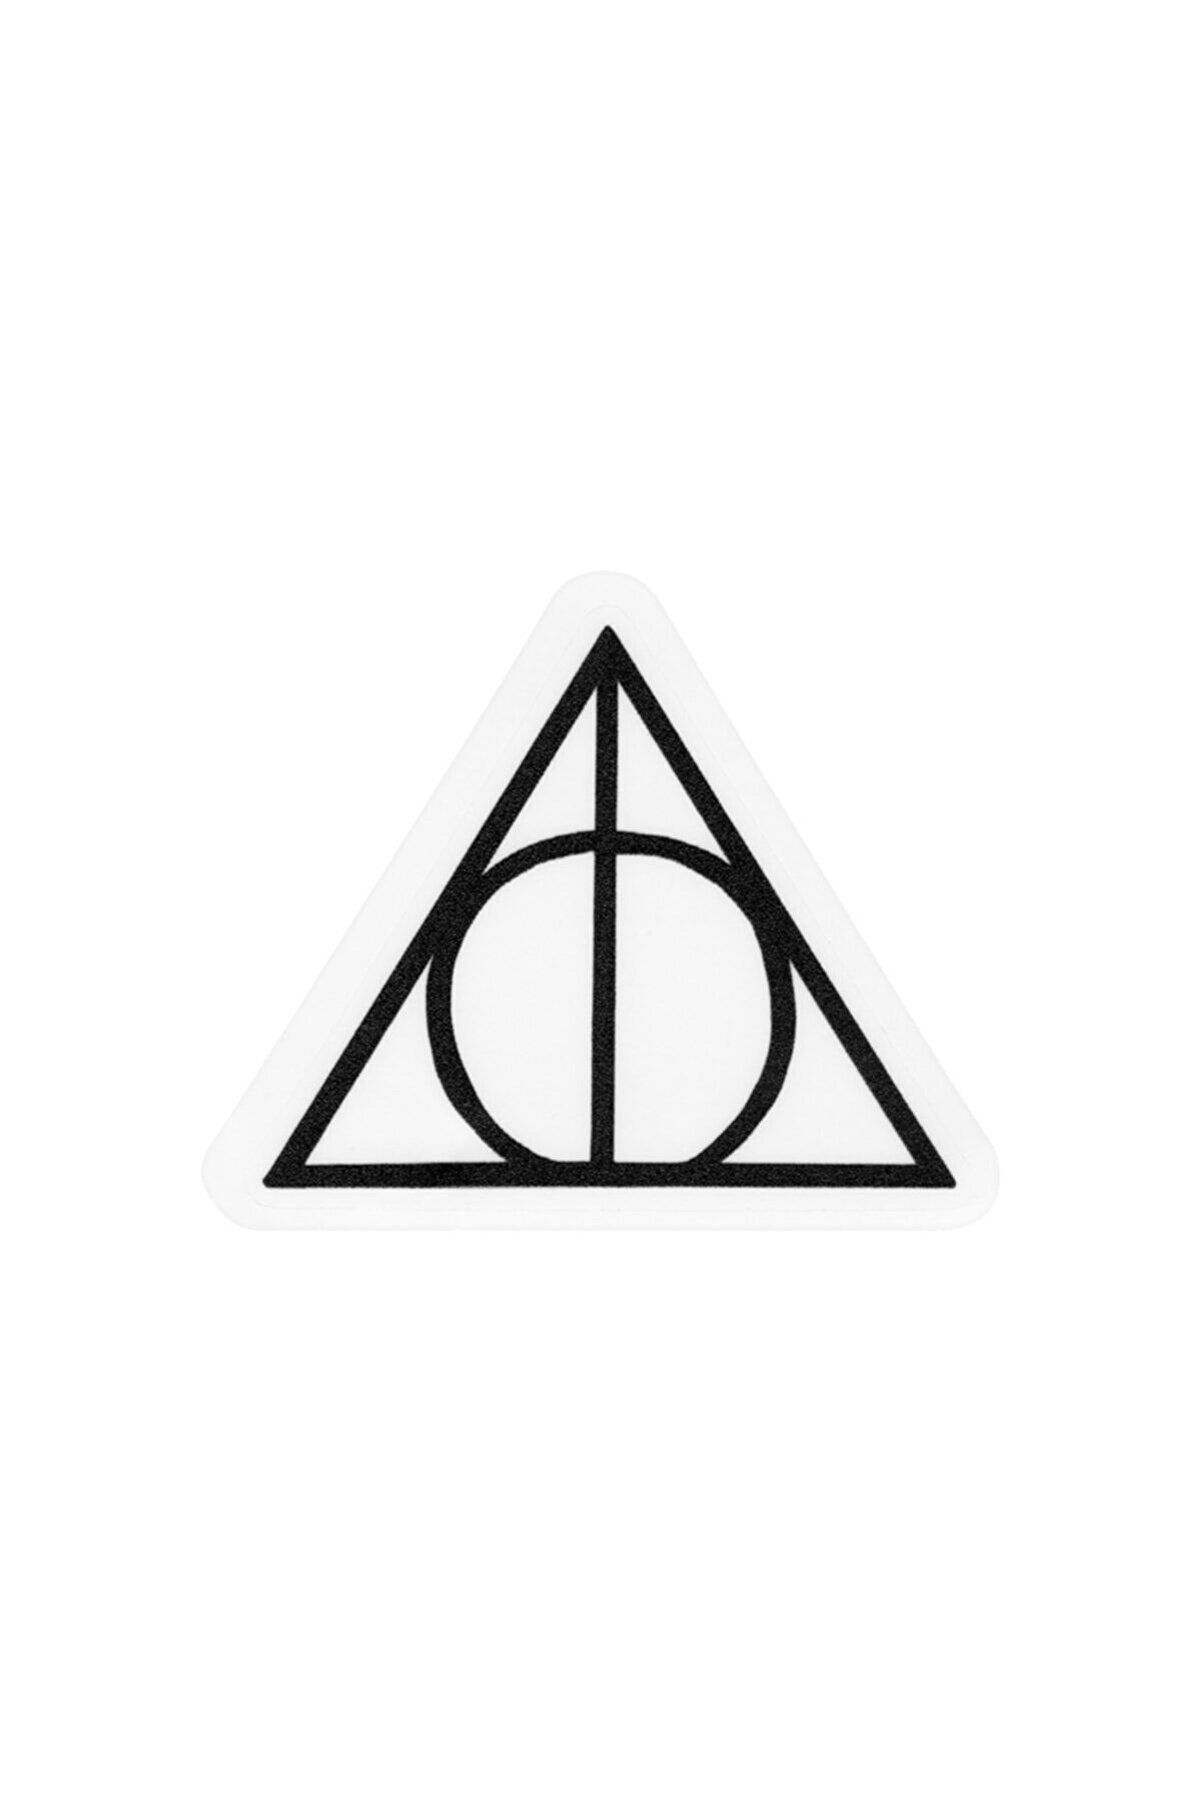 Harry Potter Dark Arts Özel Kesim Sticker Seti